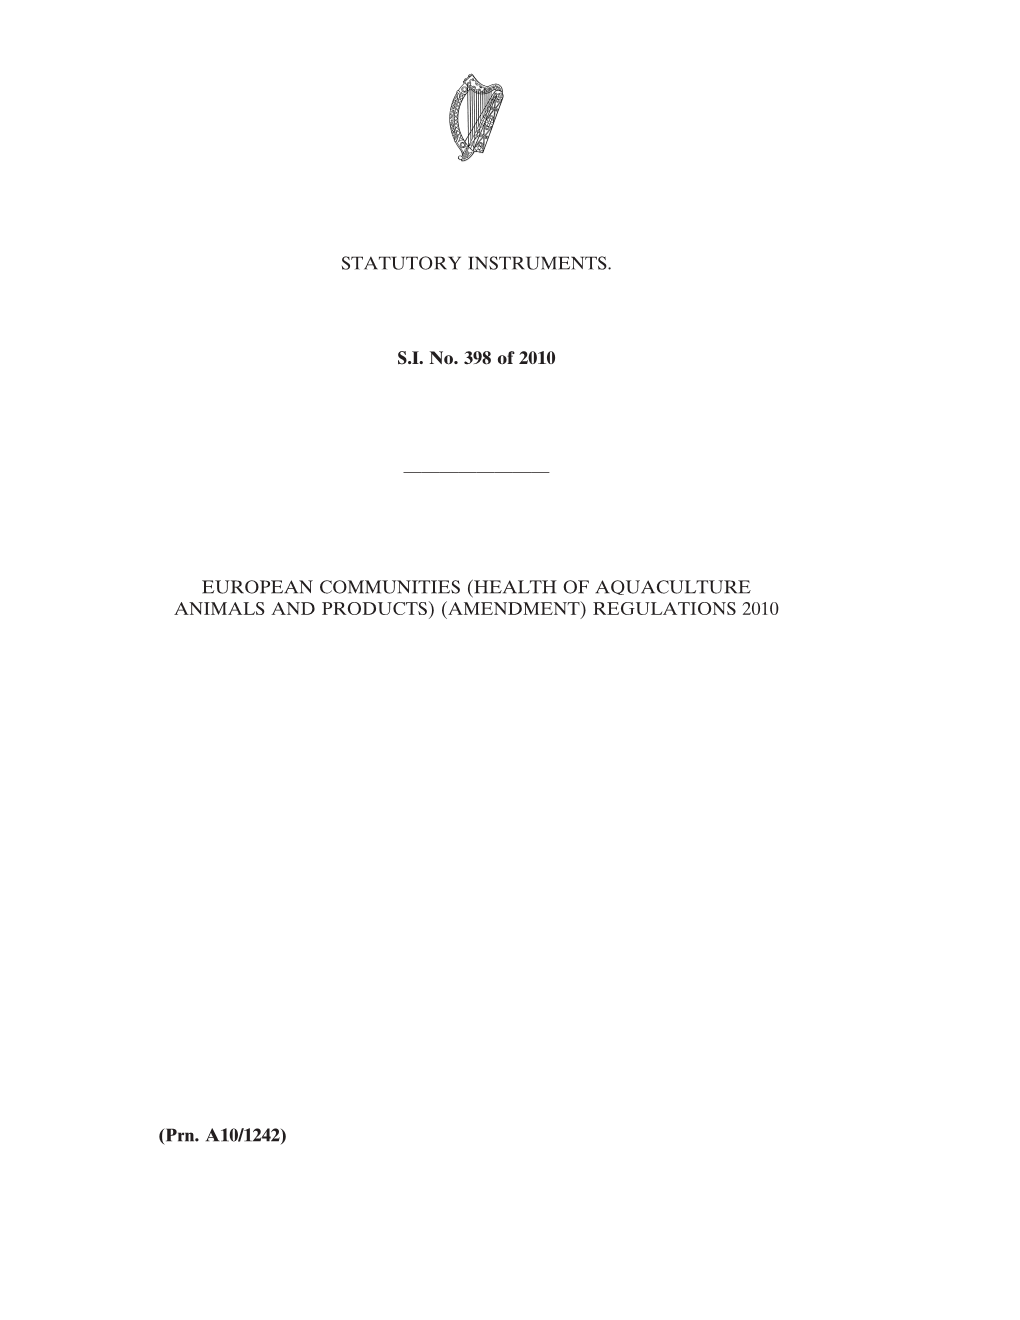 European Communities (Health of Aquaculture Animals and Products) (Amendment) Regulations 2010